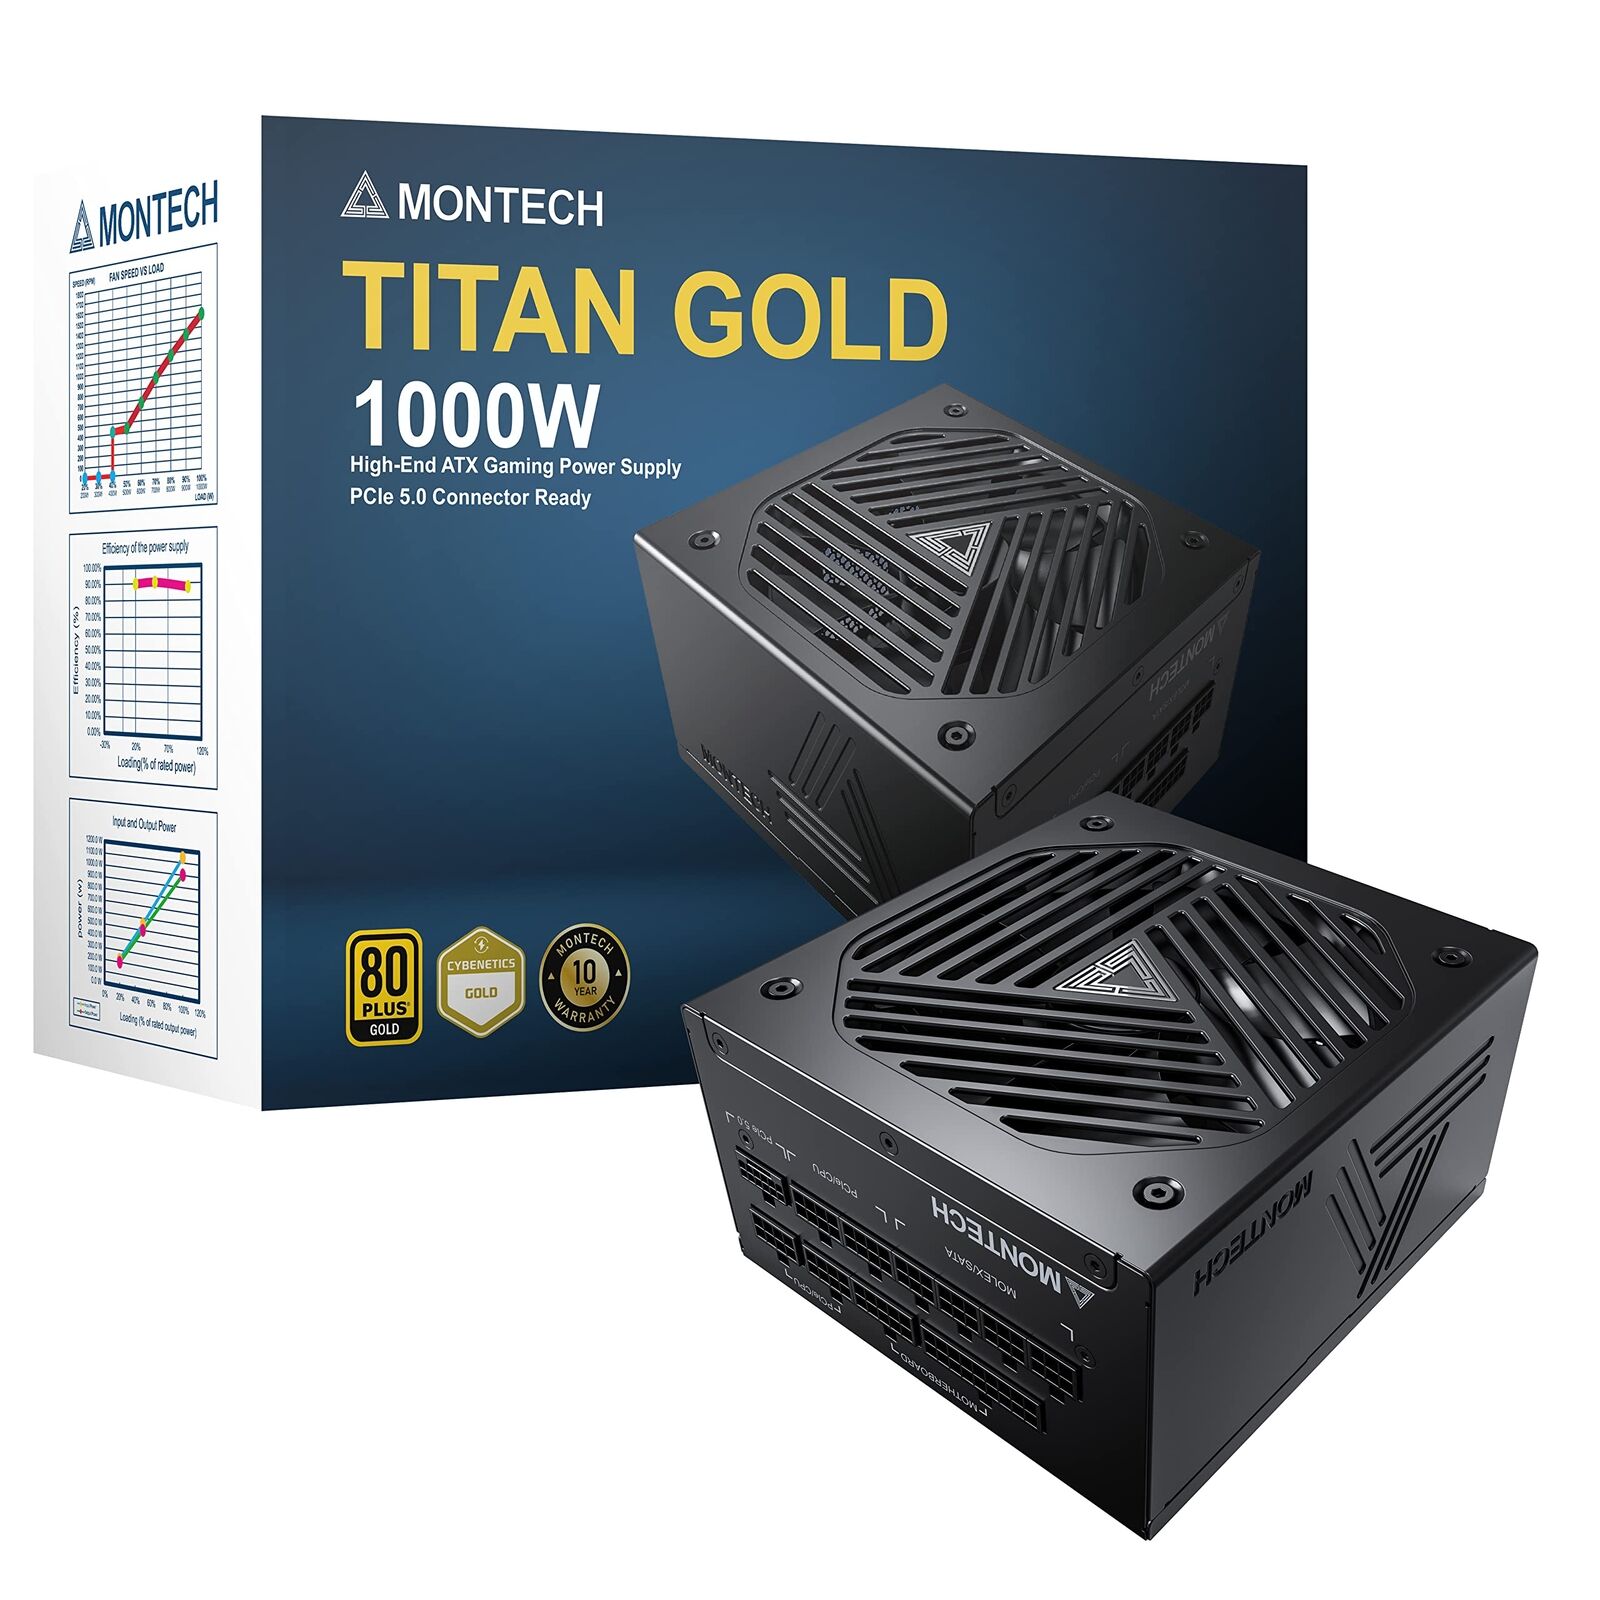 Montech TITANGOLD1000W Titan Gold - Power Supply - Premium High-end Atx, Gaming